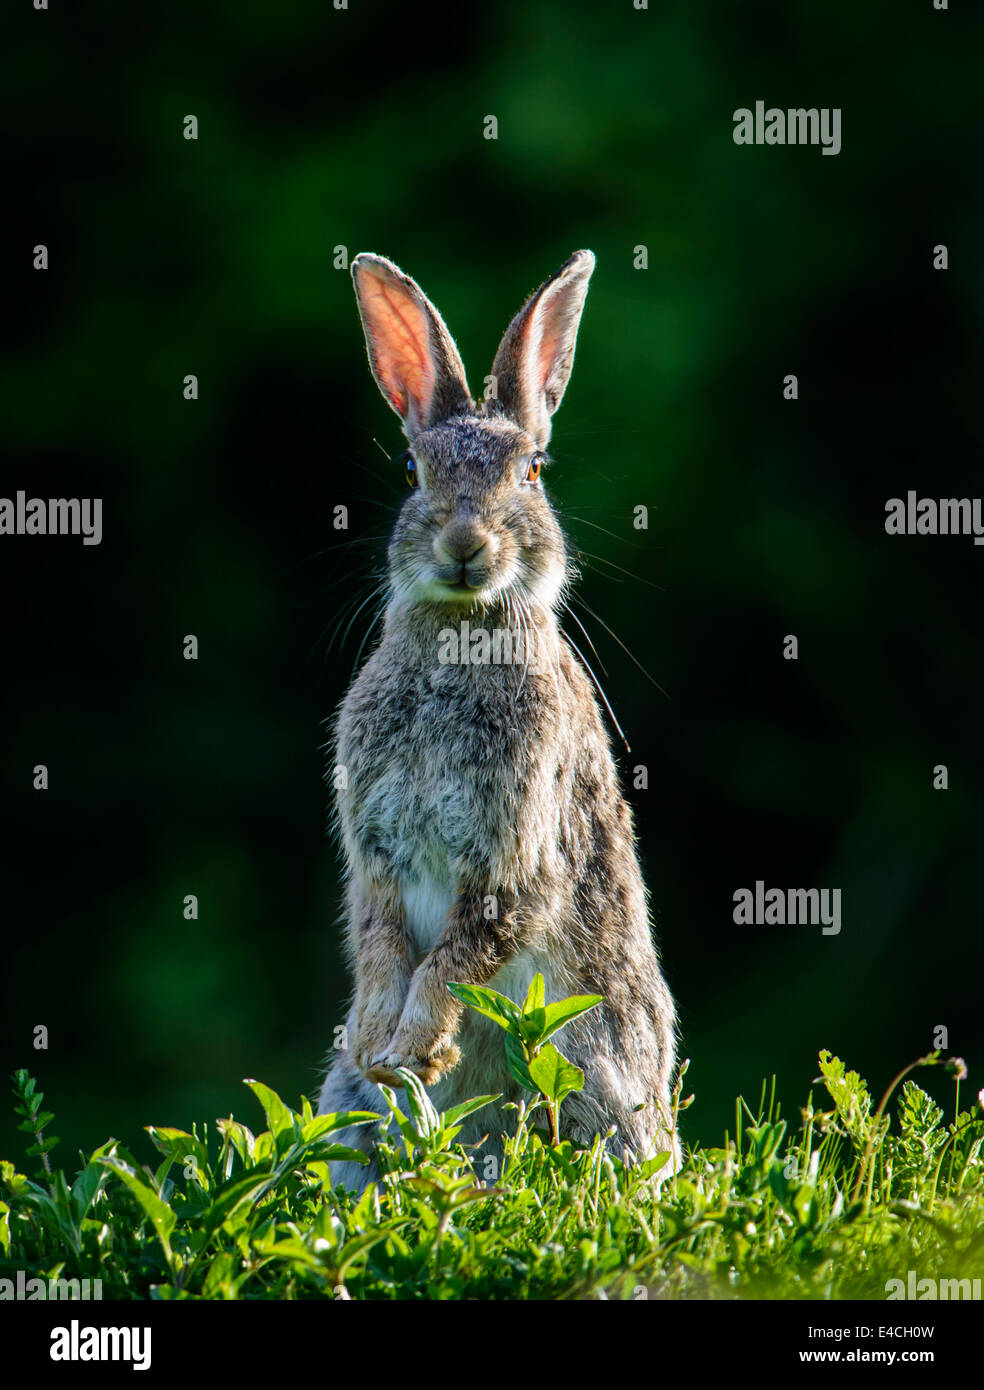 Conejo pie alerta al peligro Foto de stock